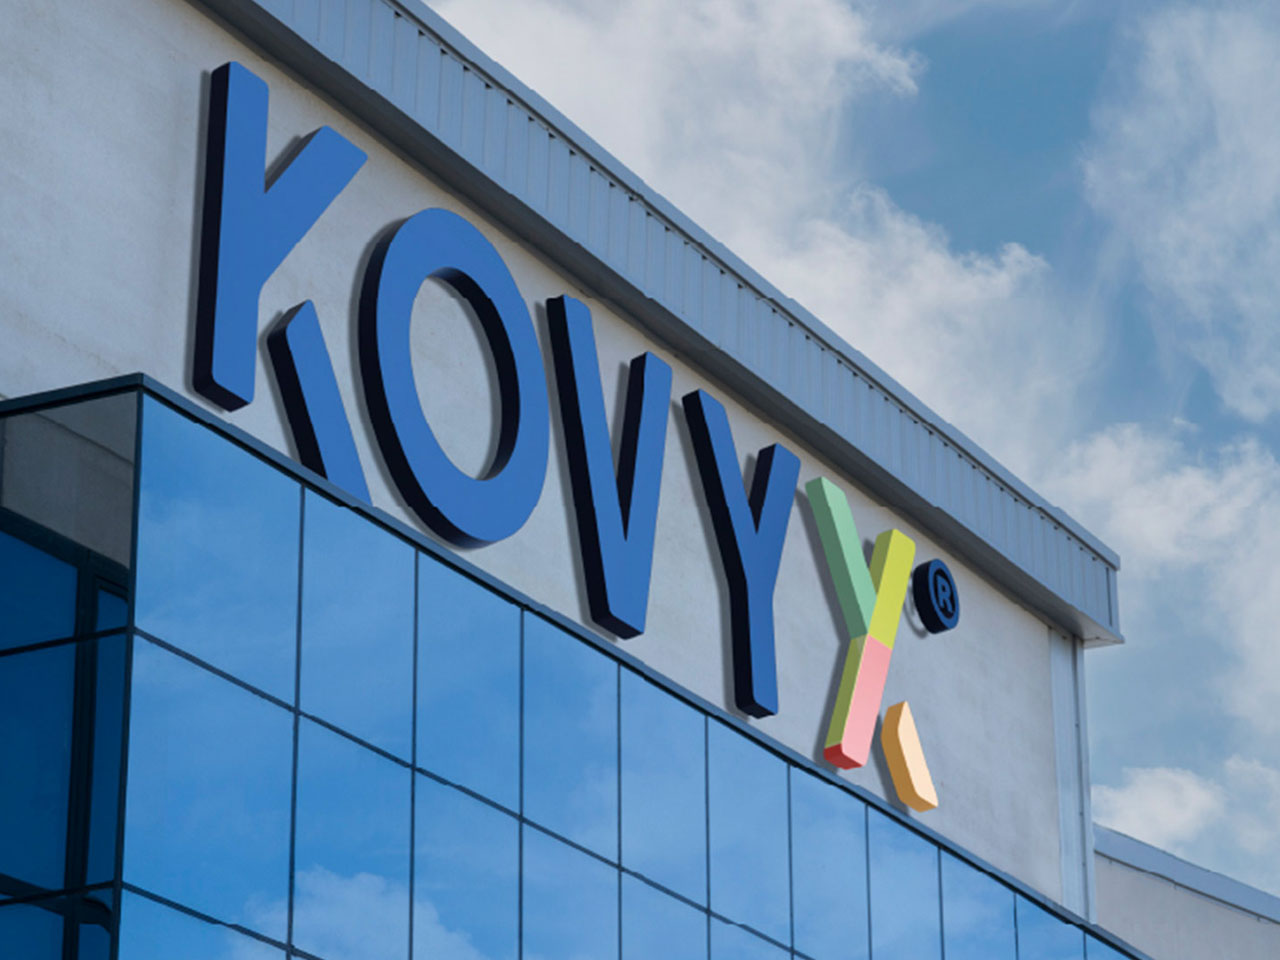 Oficinas de Kovyx